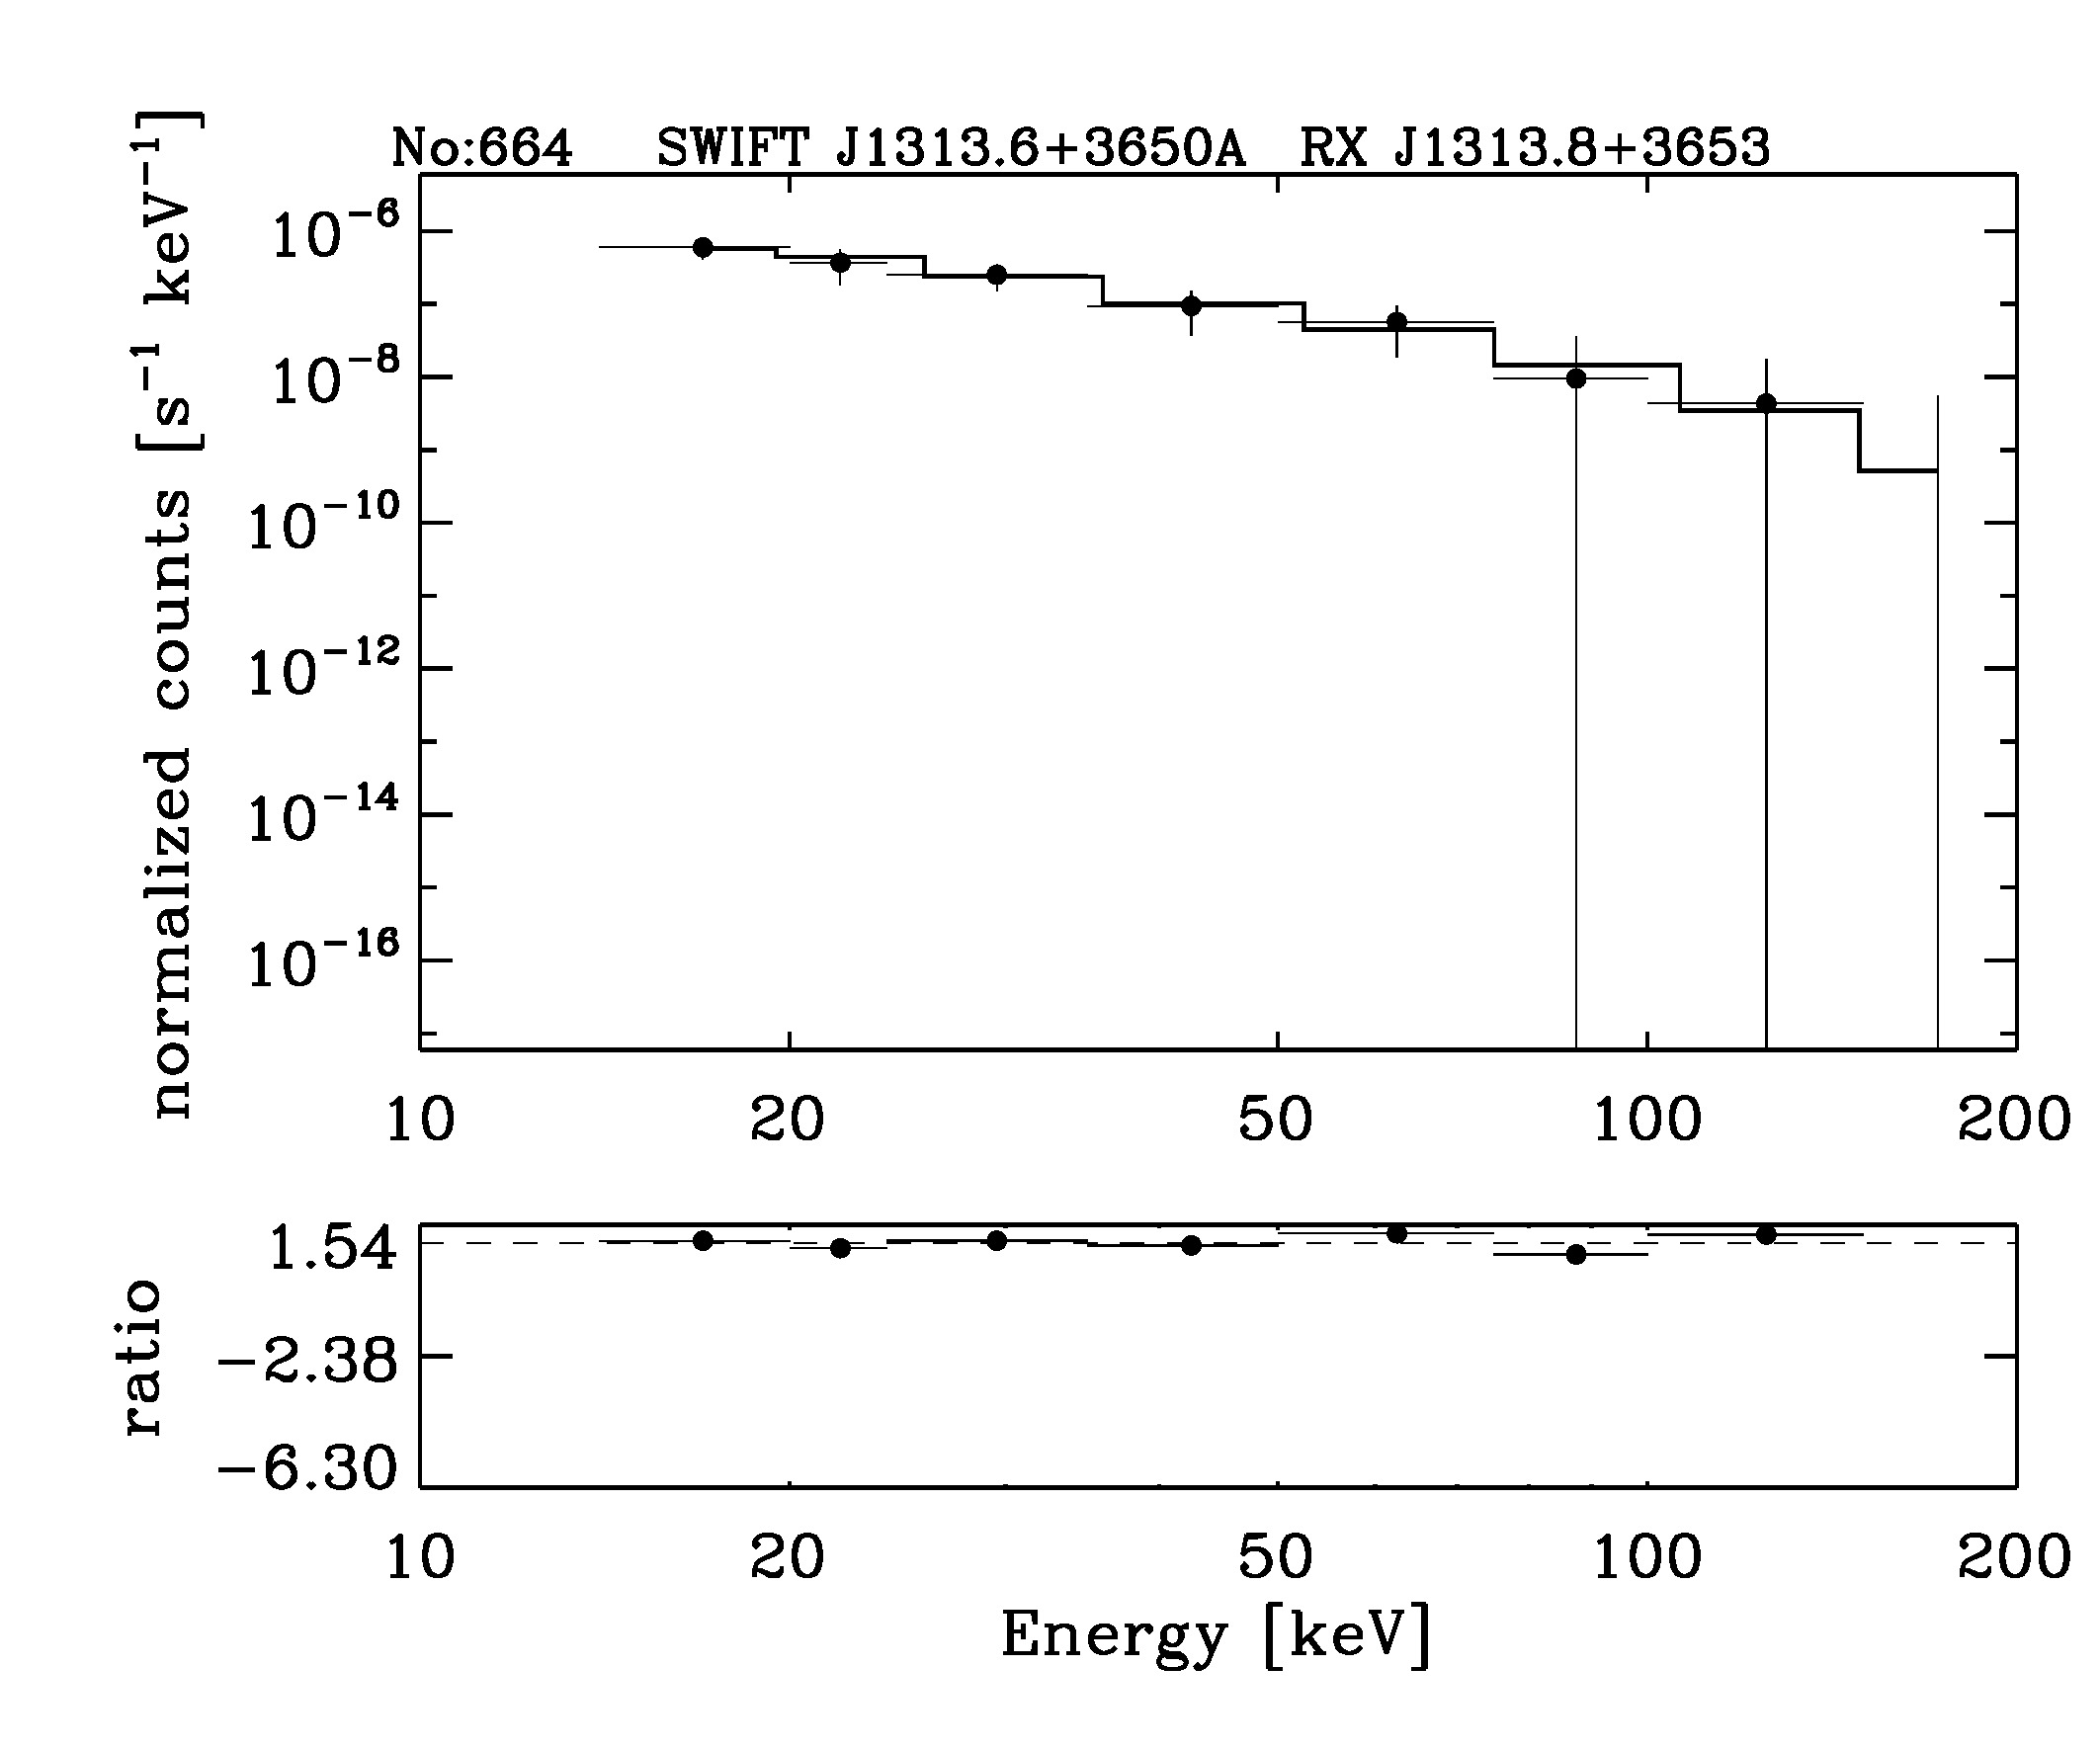 BAT Spectrum for SWIFT J1313.6+3650A